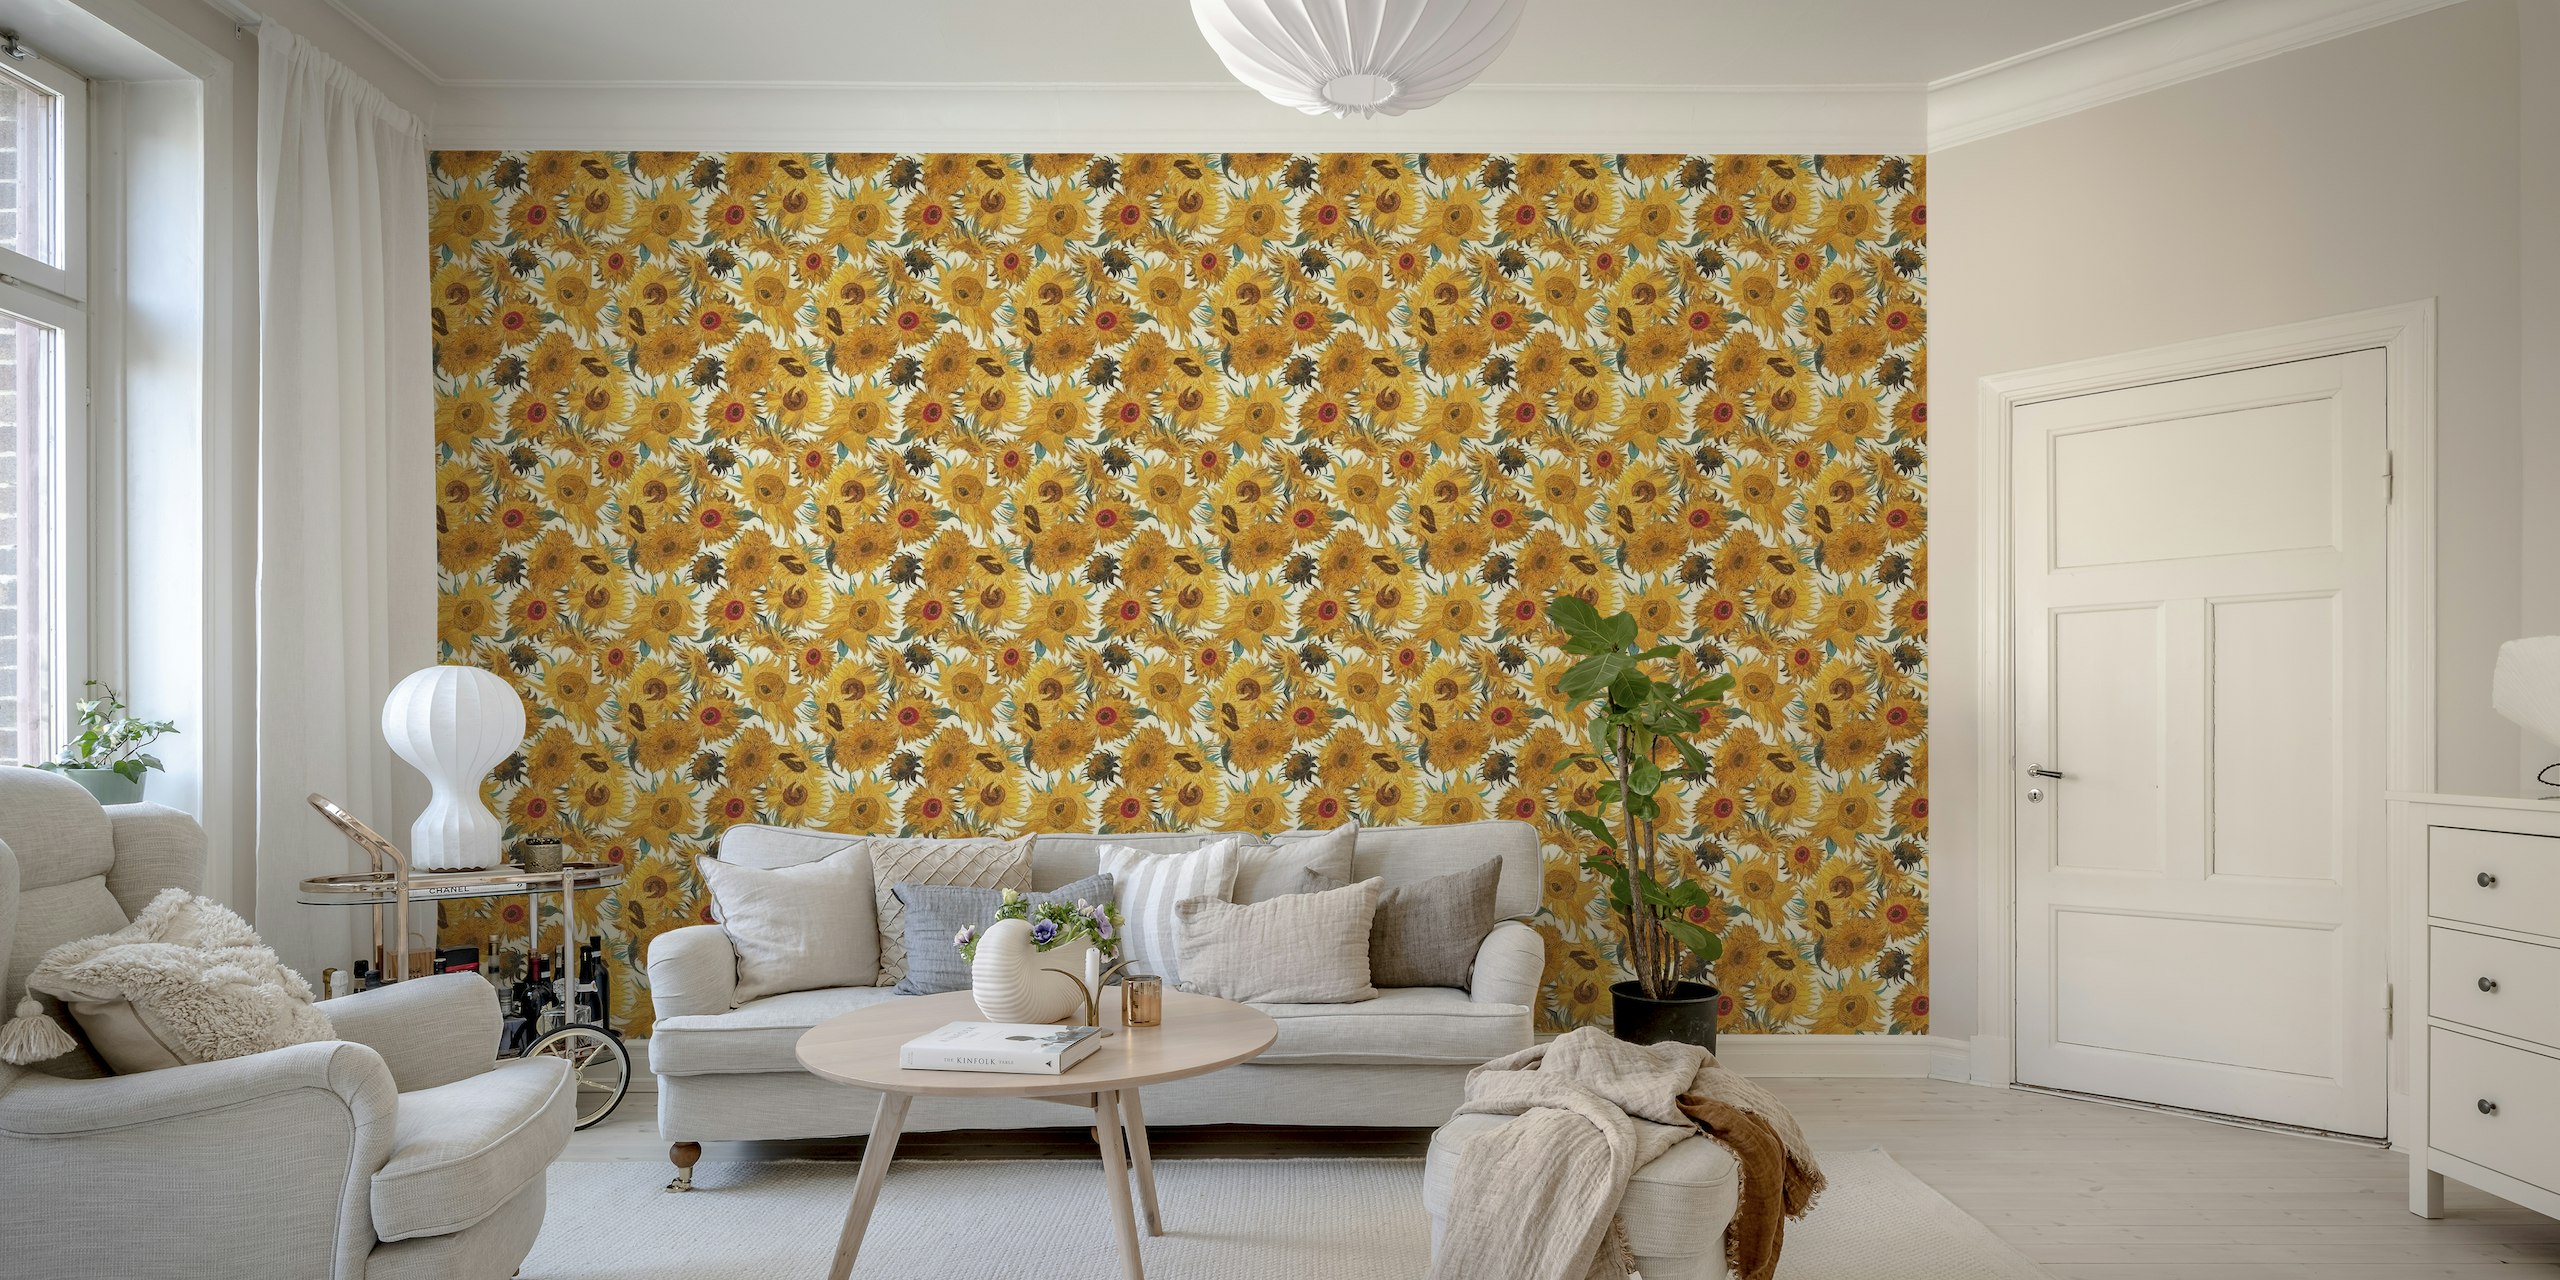 Van Gogh-inspired sunflower pattern wall mural in cream, yellow, aqua, and brown.